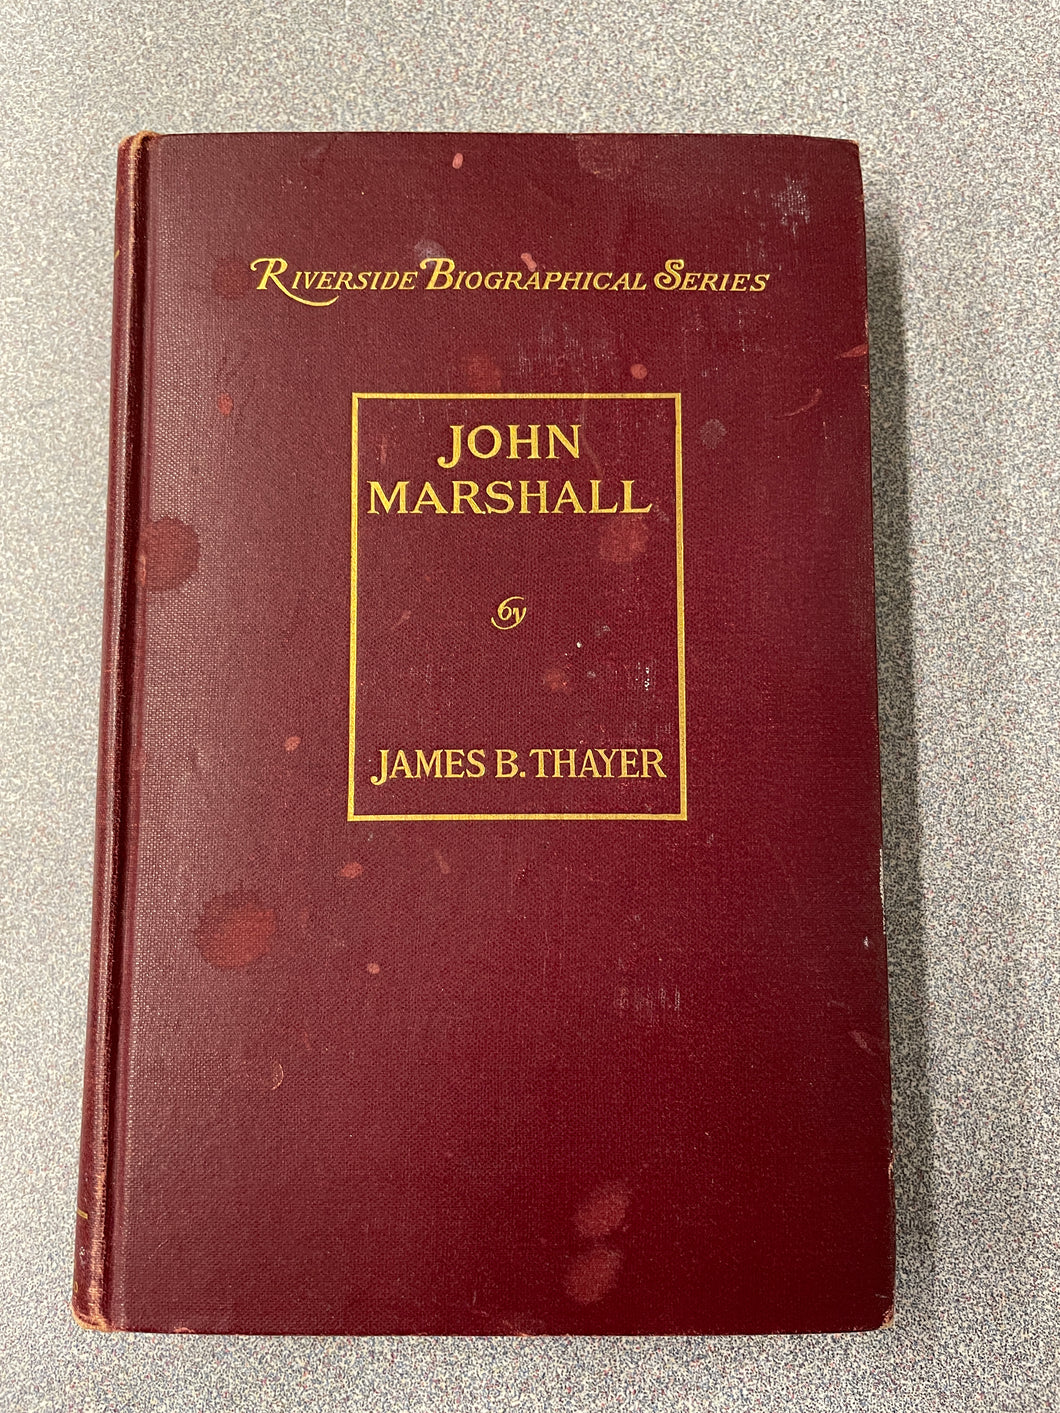 Thayer, James B., John Marshall [1901] CC 11/23